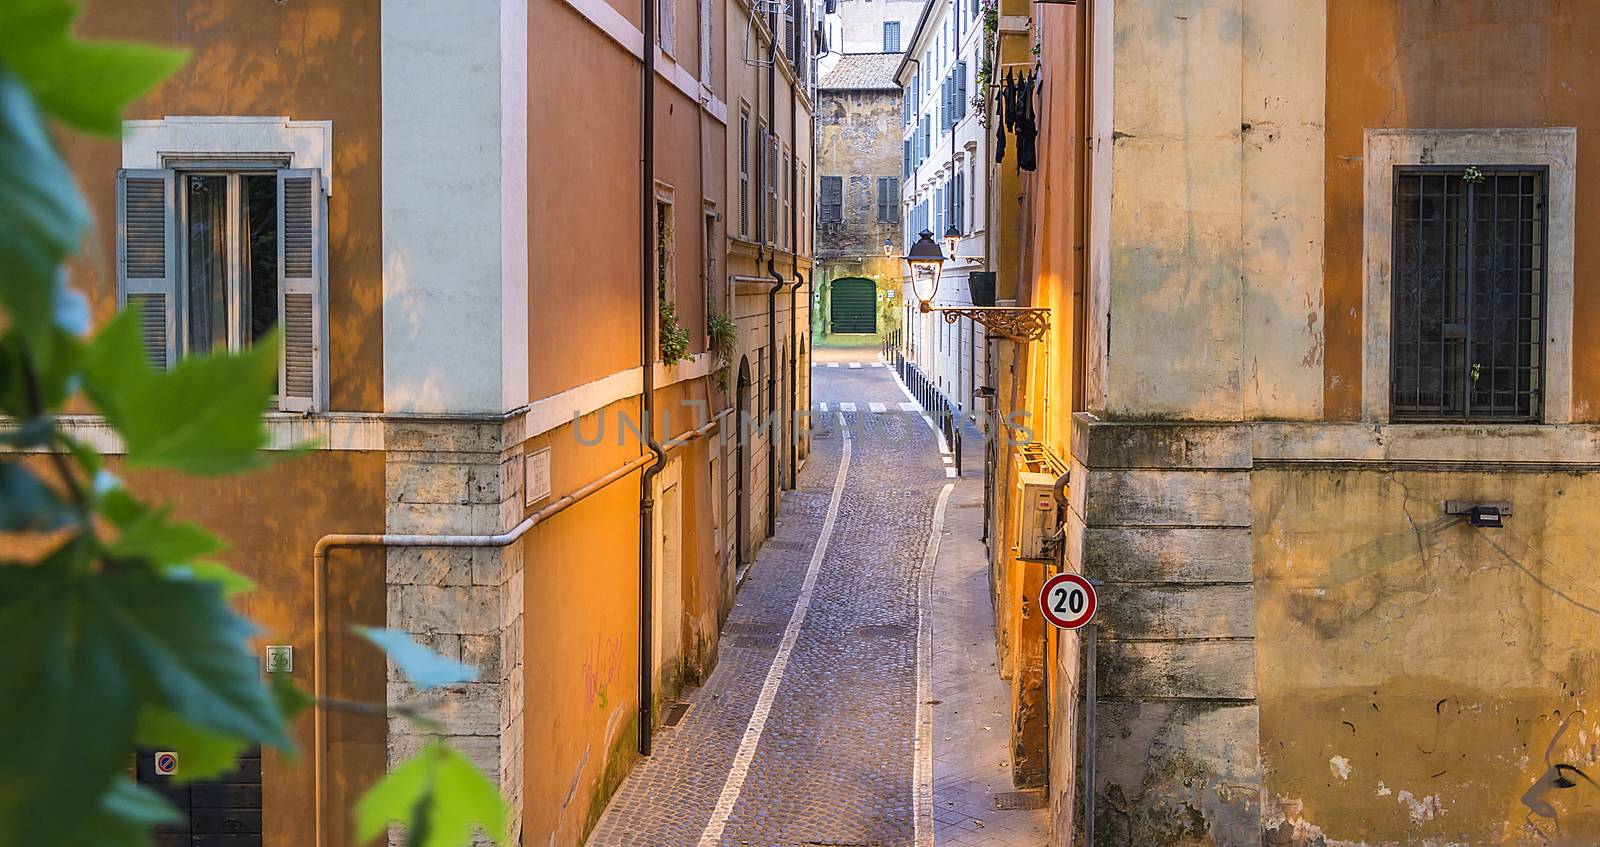 Via degli amatriciani. beautiful medieval street in Rome